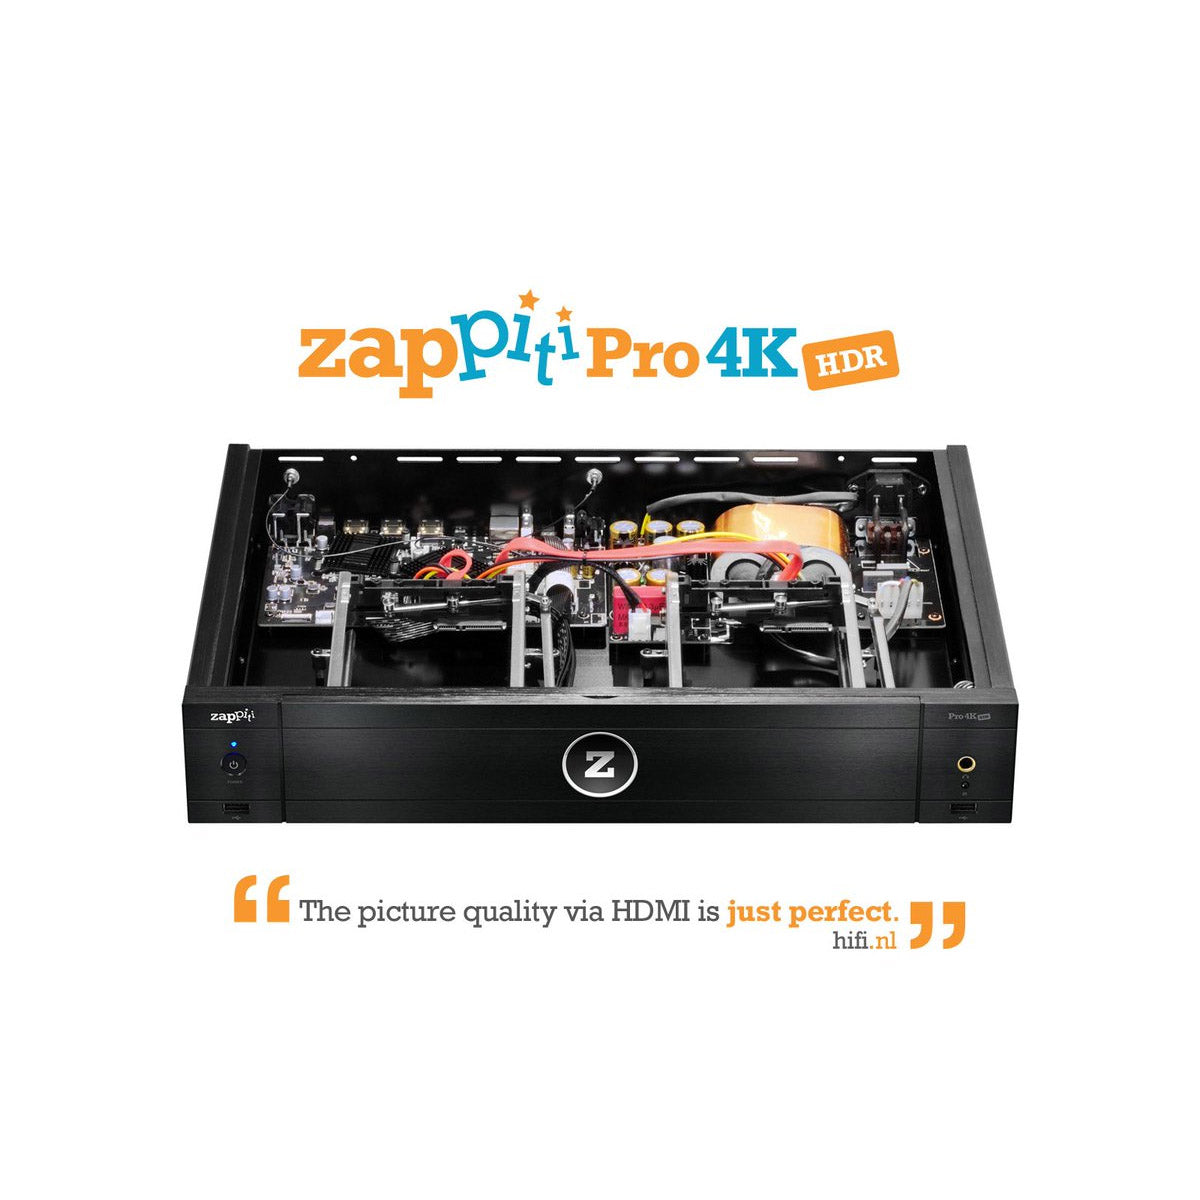 Zappiti PRO 4K HDR 多媒體播放器